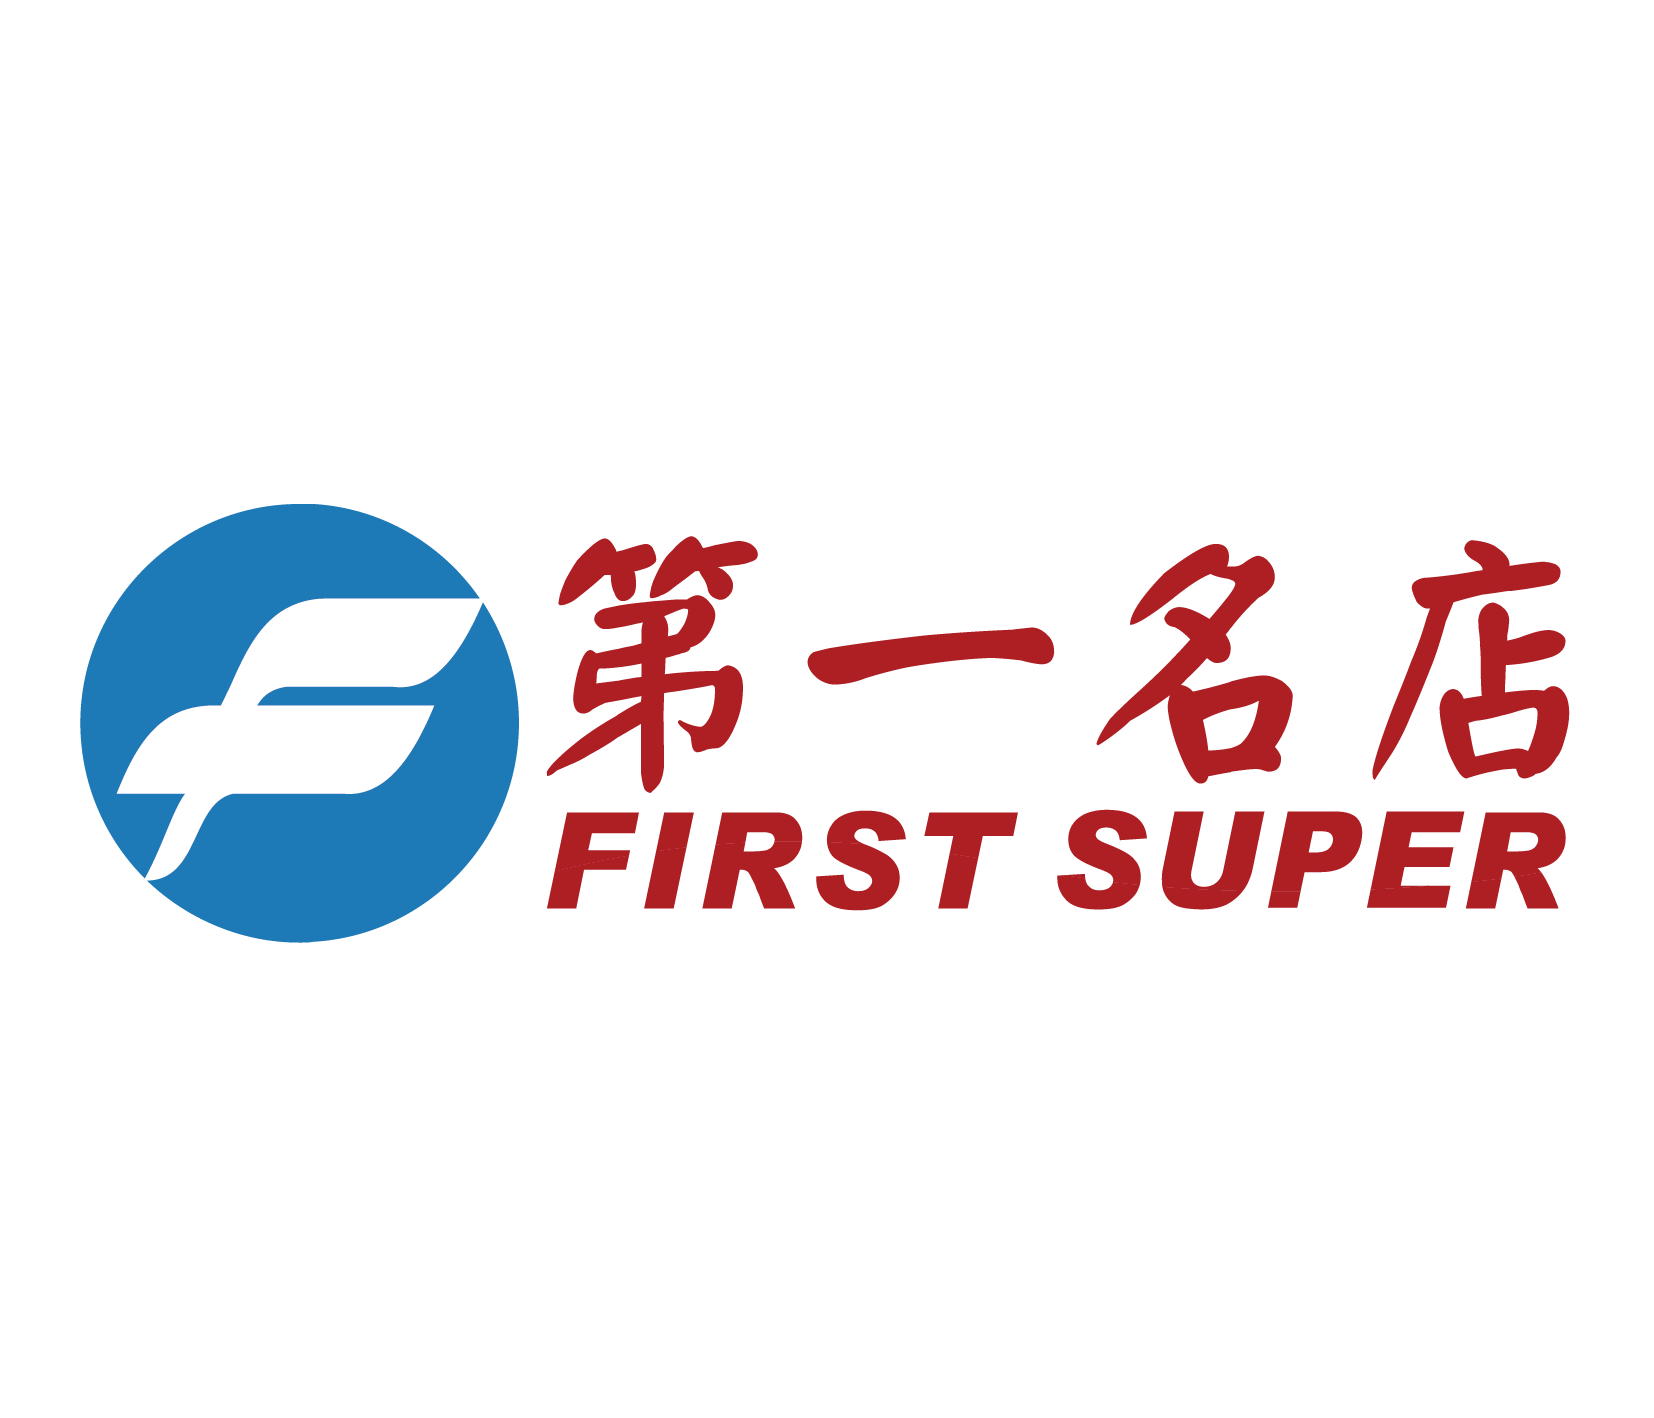 FIRST SUPER